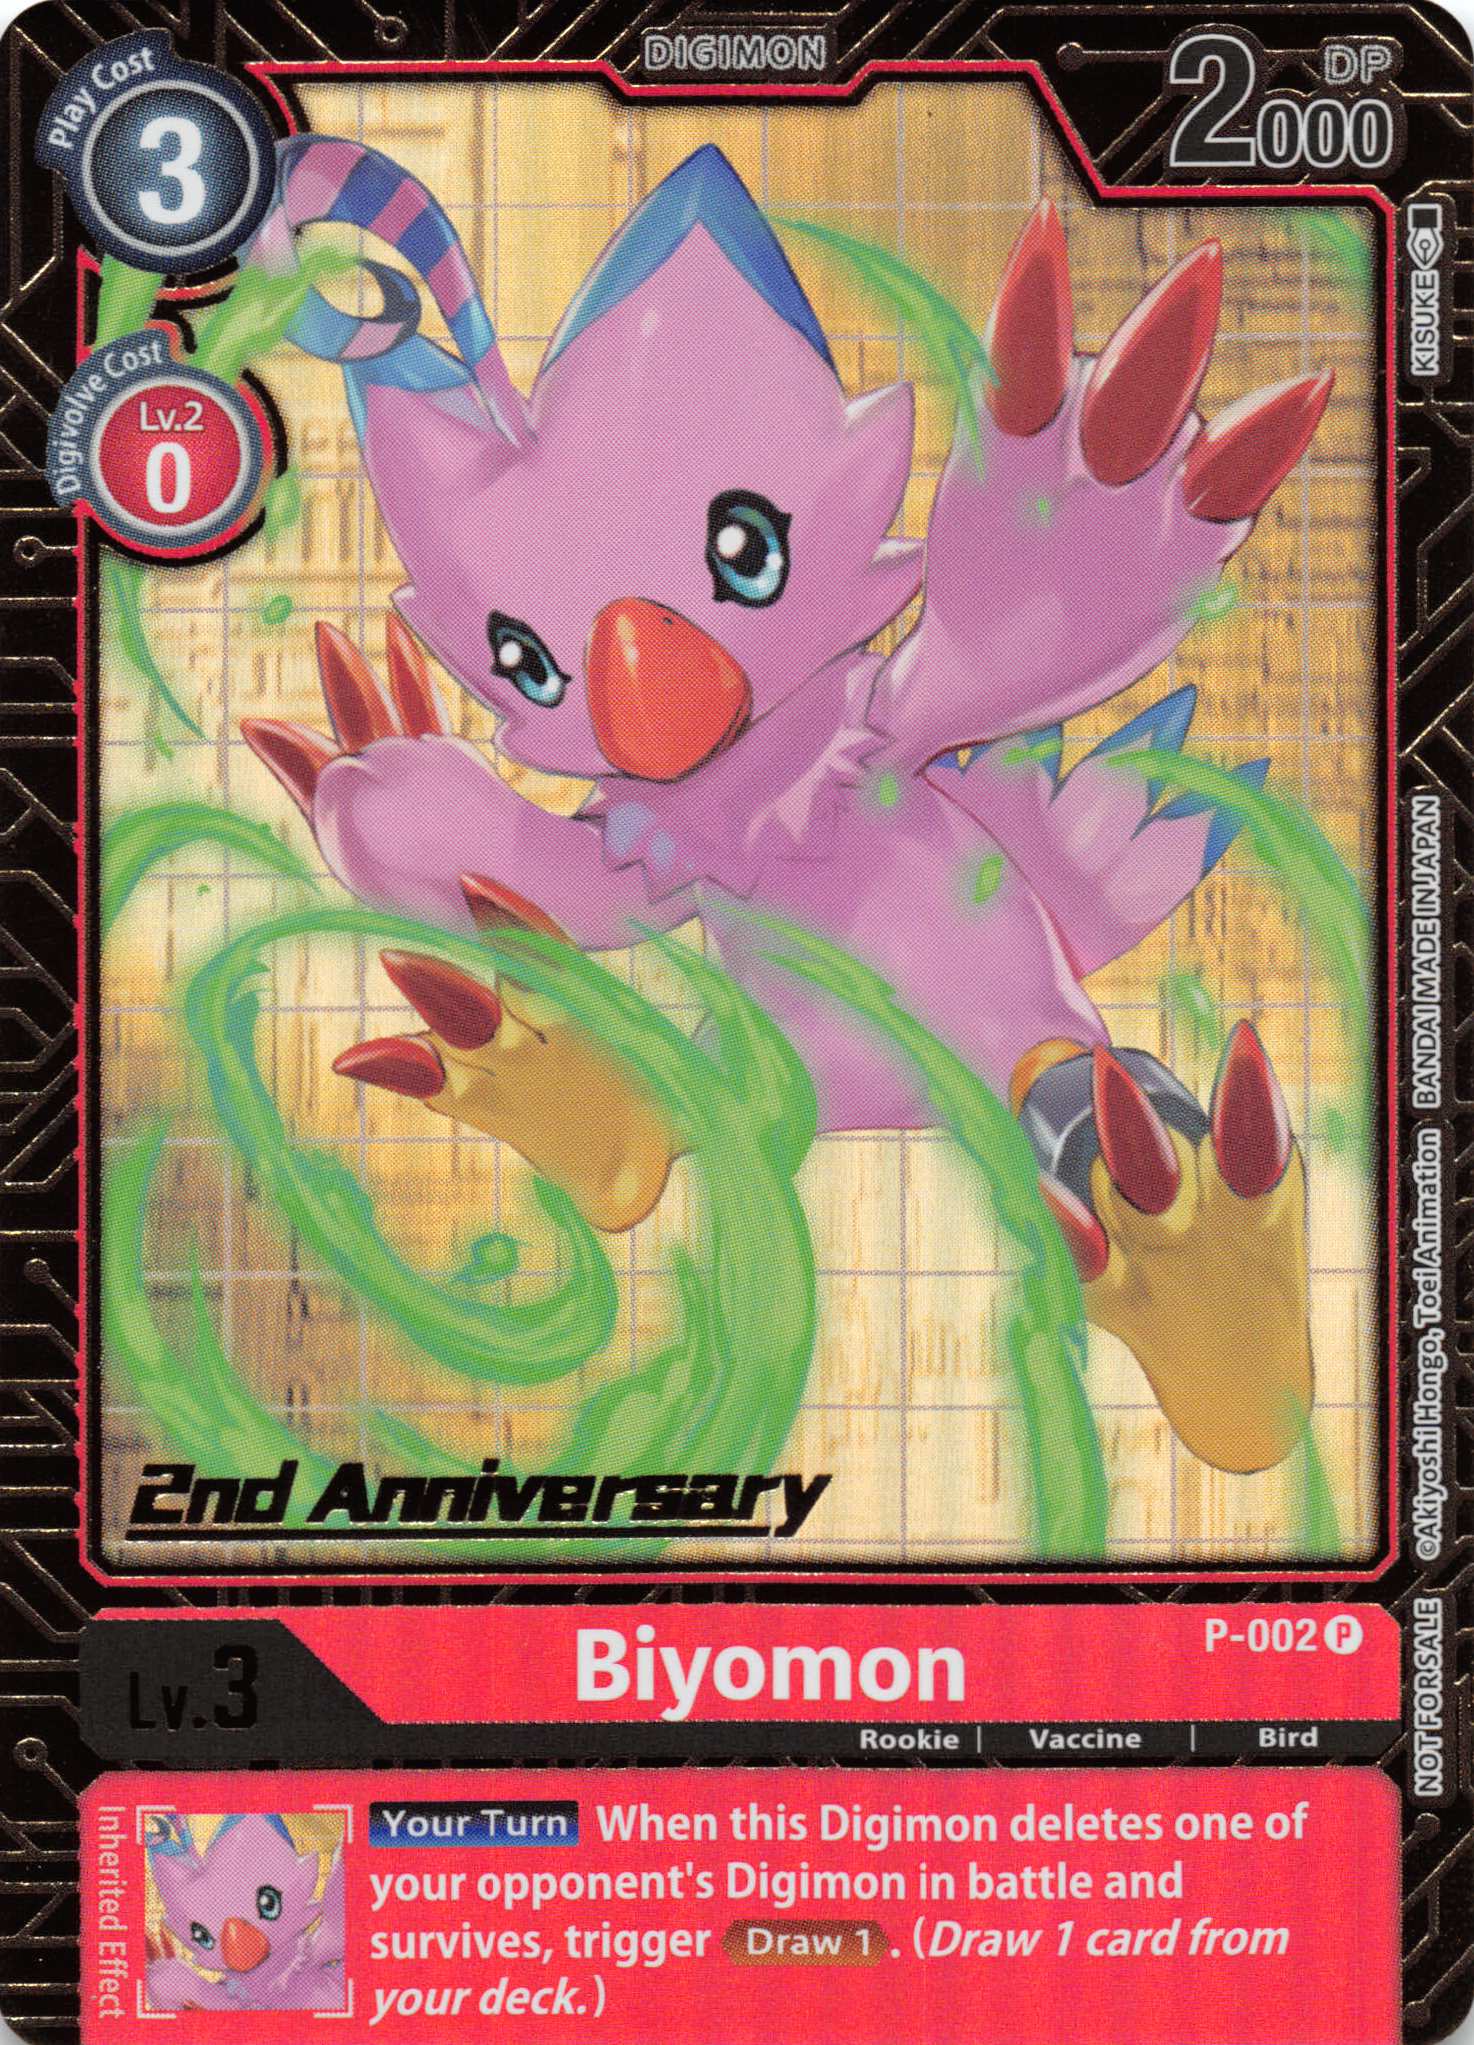 Biyomon - P-002 (2nd Anniversary Card Set) [P-002] [Digimon Promotion Cards] Foil